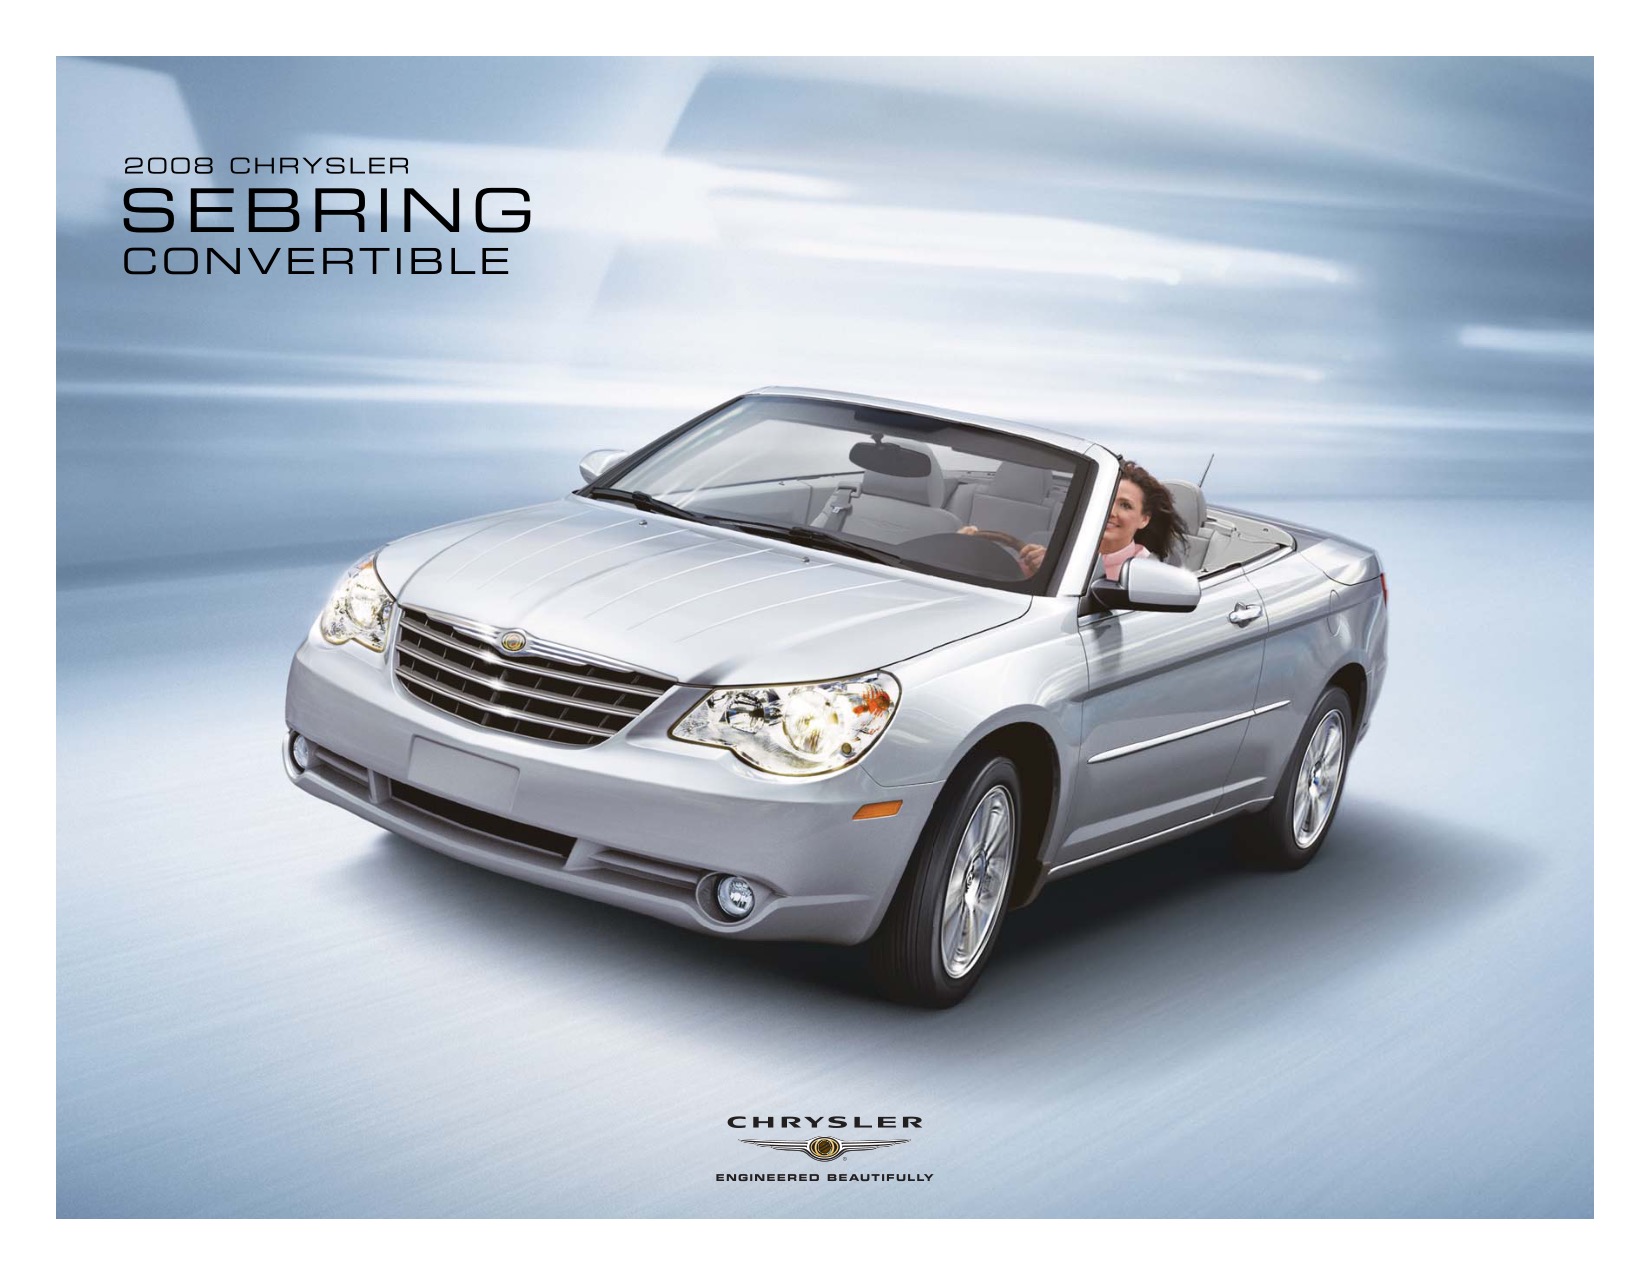 2008 Chrysler Sebring Convertible Brochure